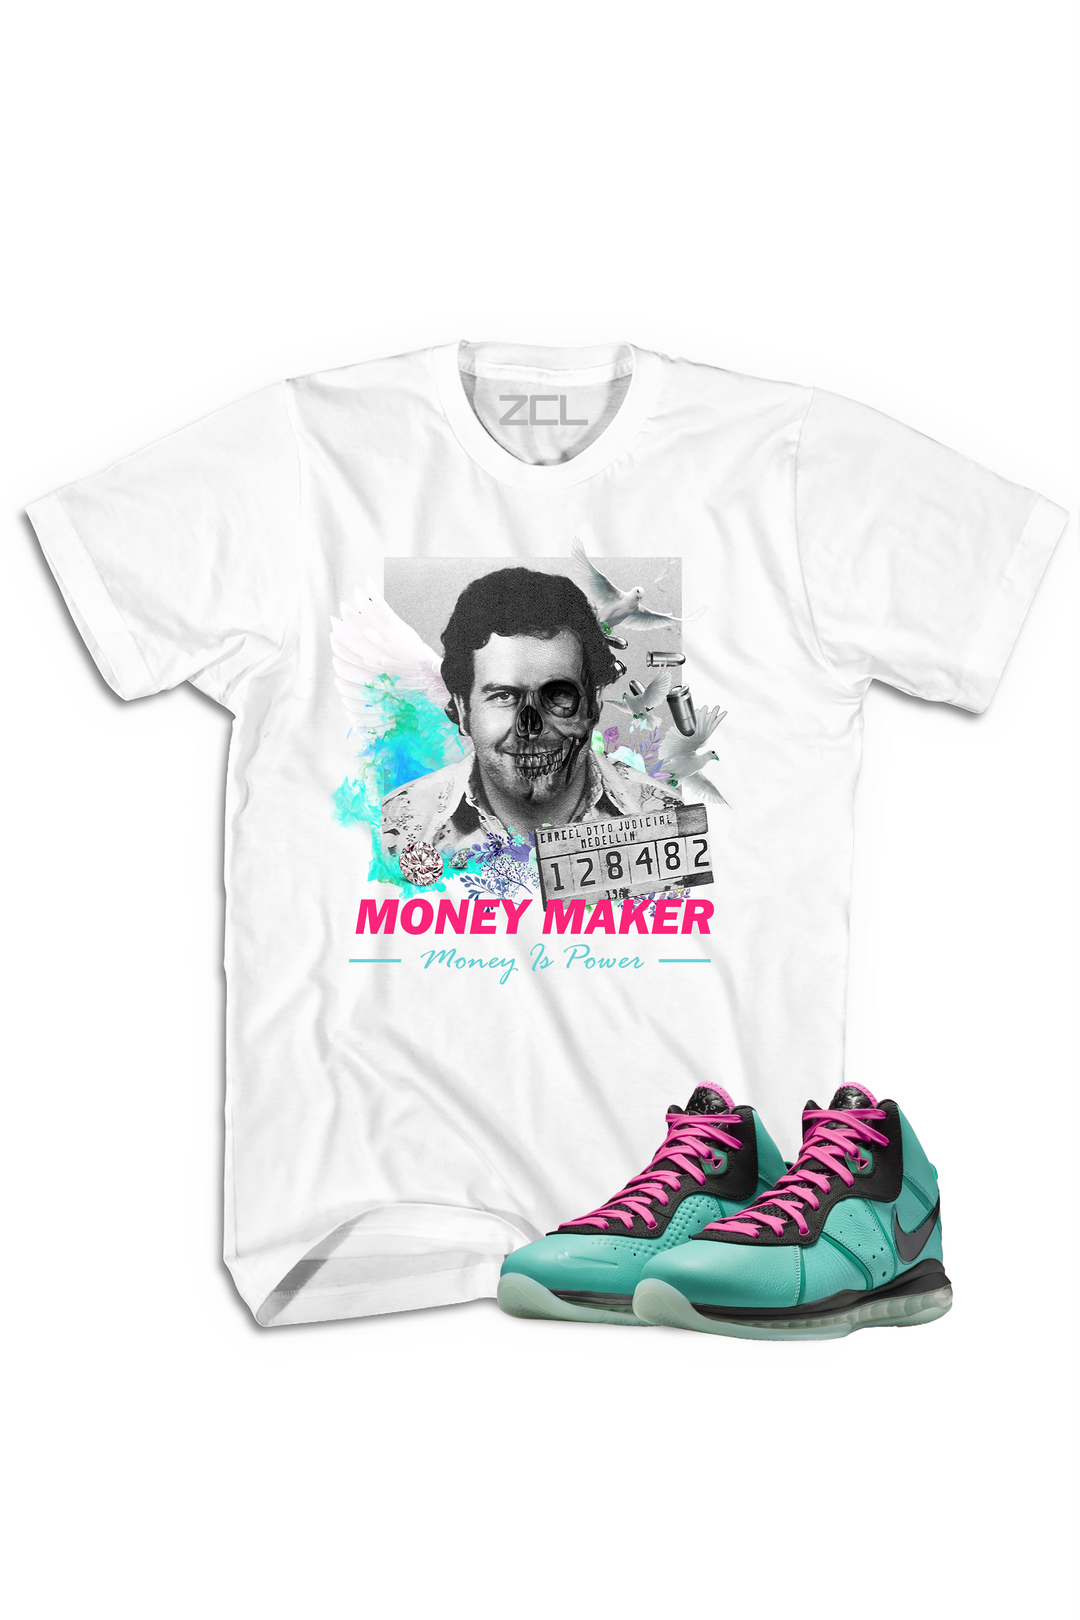 Nike Lebron 8 "Money Maker" Tee South Beach 2021 - Zamage